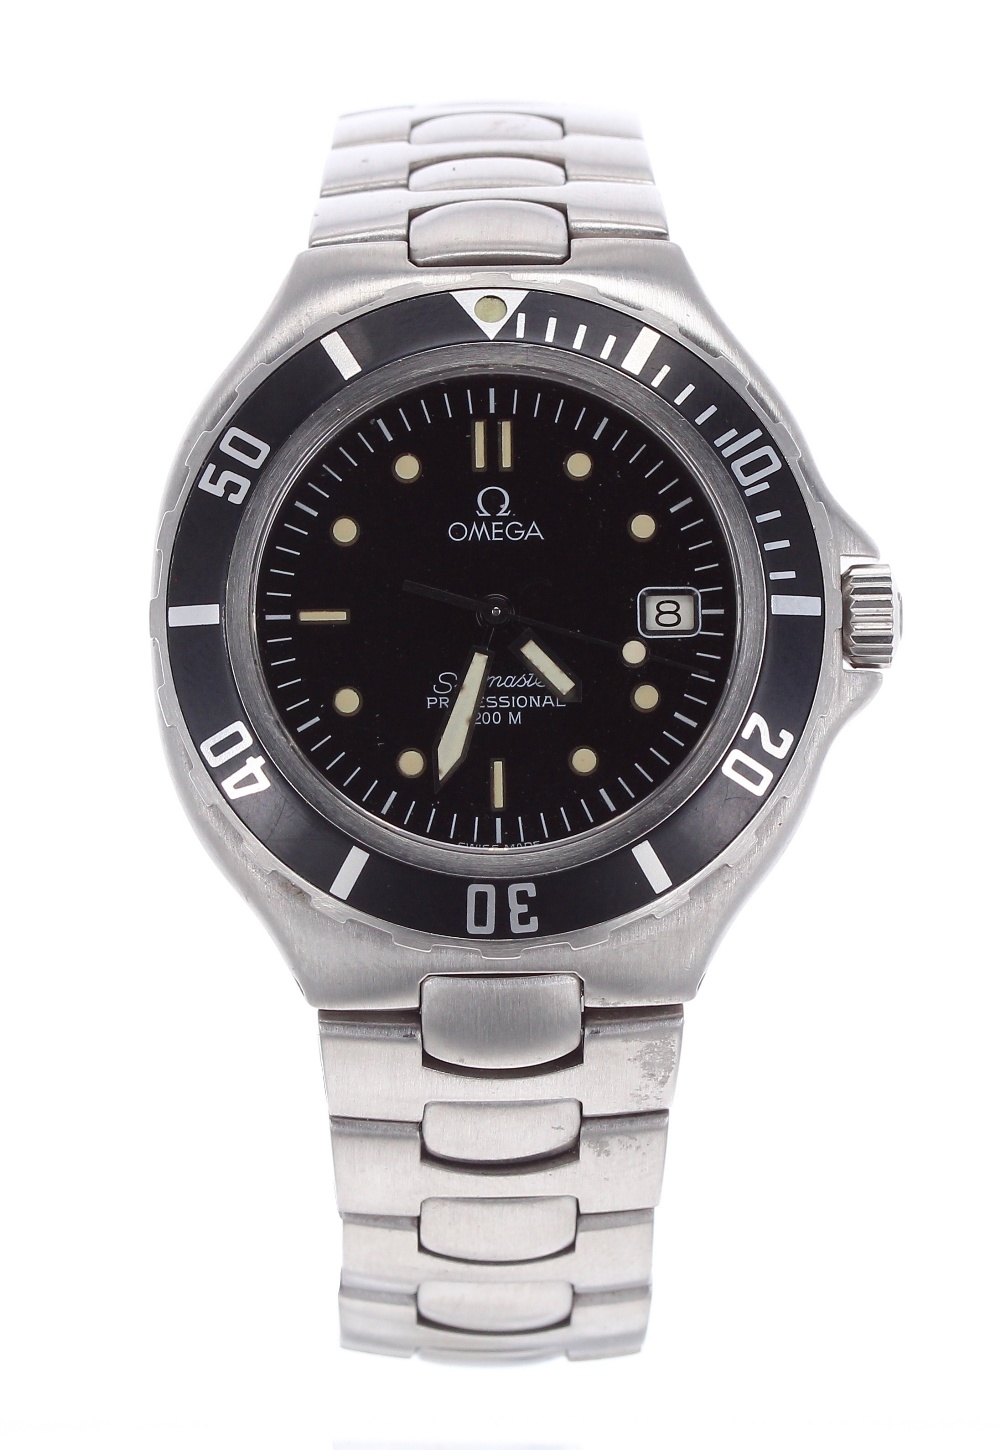 Omega Seamaster Professional 200M mid-size stainless steel bracelet watch, black rotating bezel, - Image 2 of 5